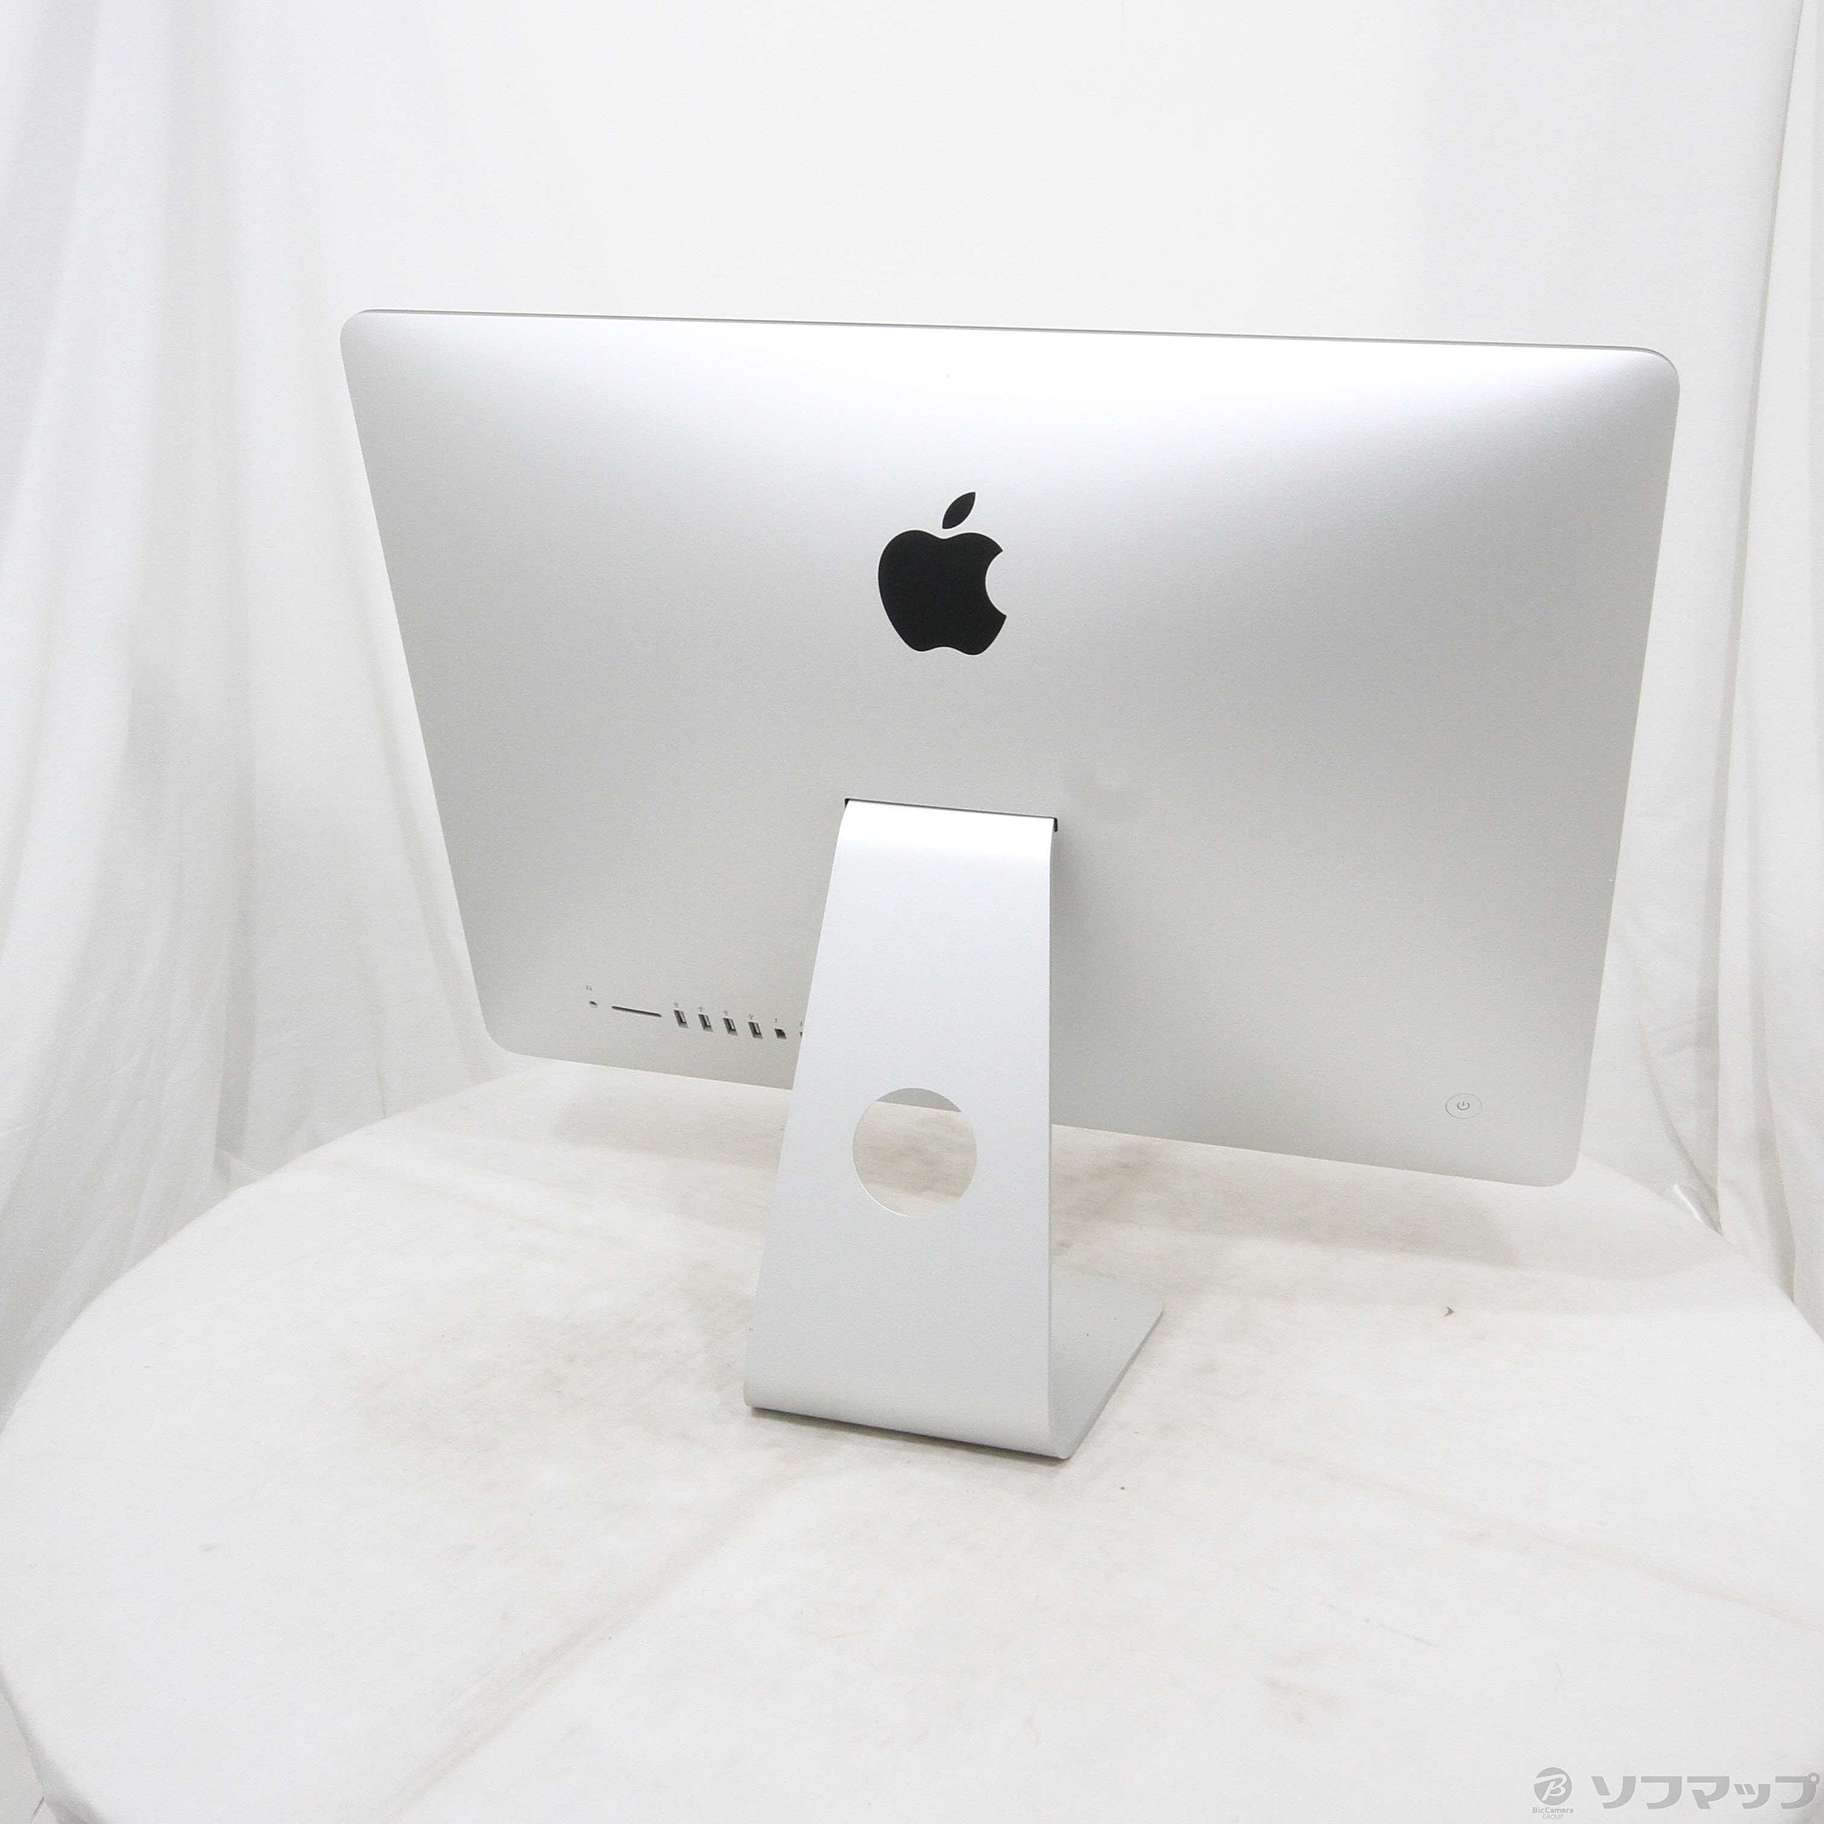 Apple iMac 21.5インチ ME087J/A (Late 2013)